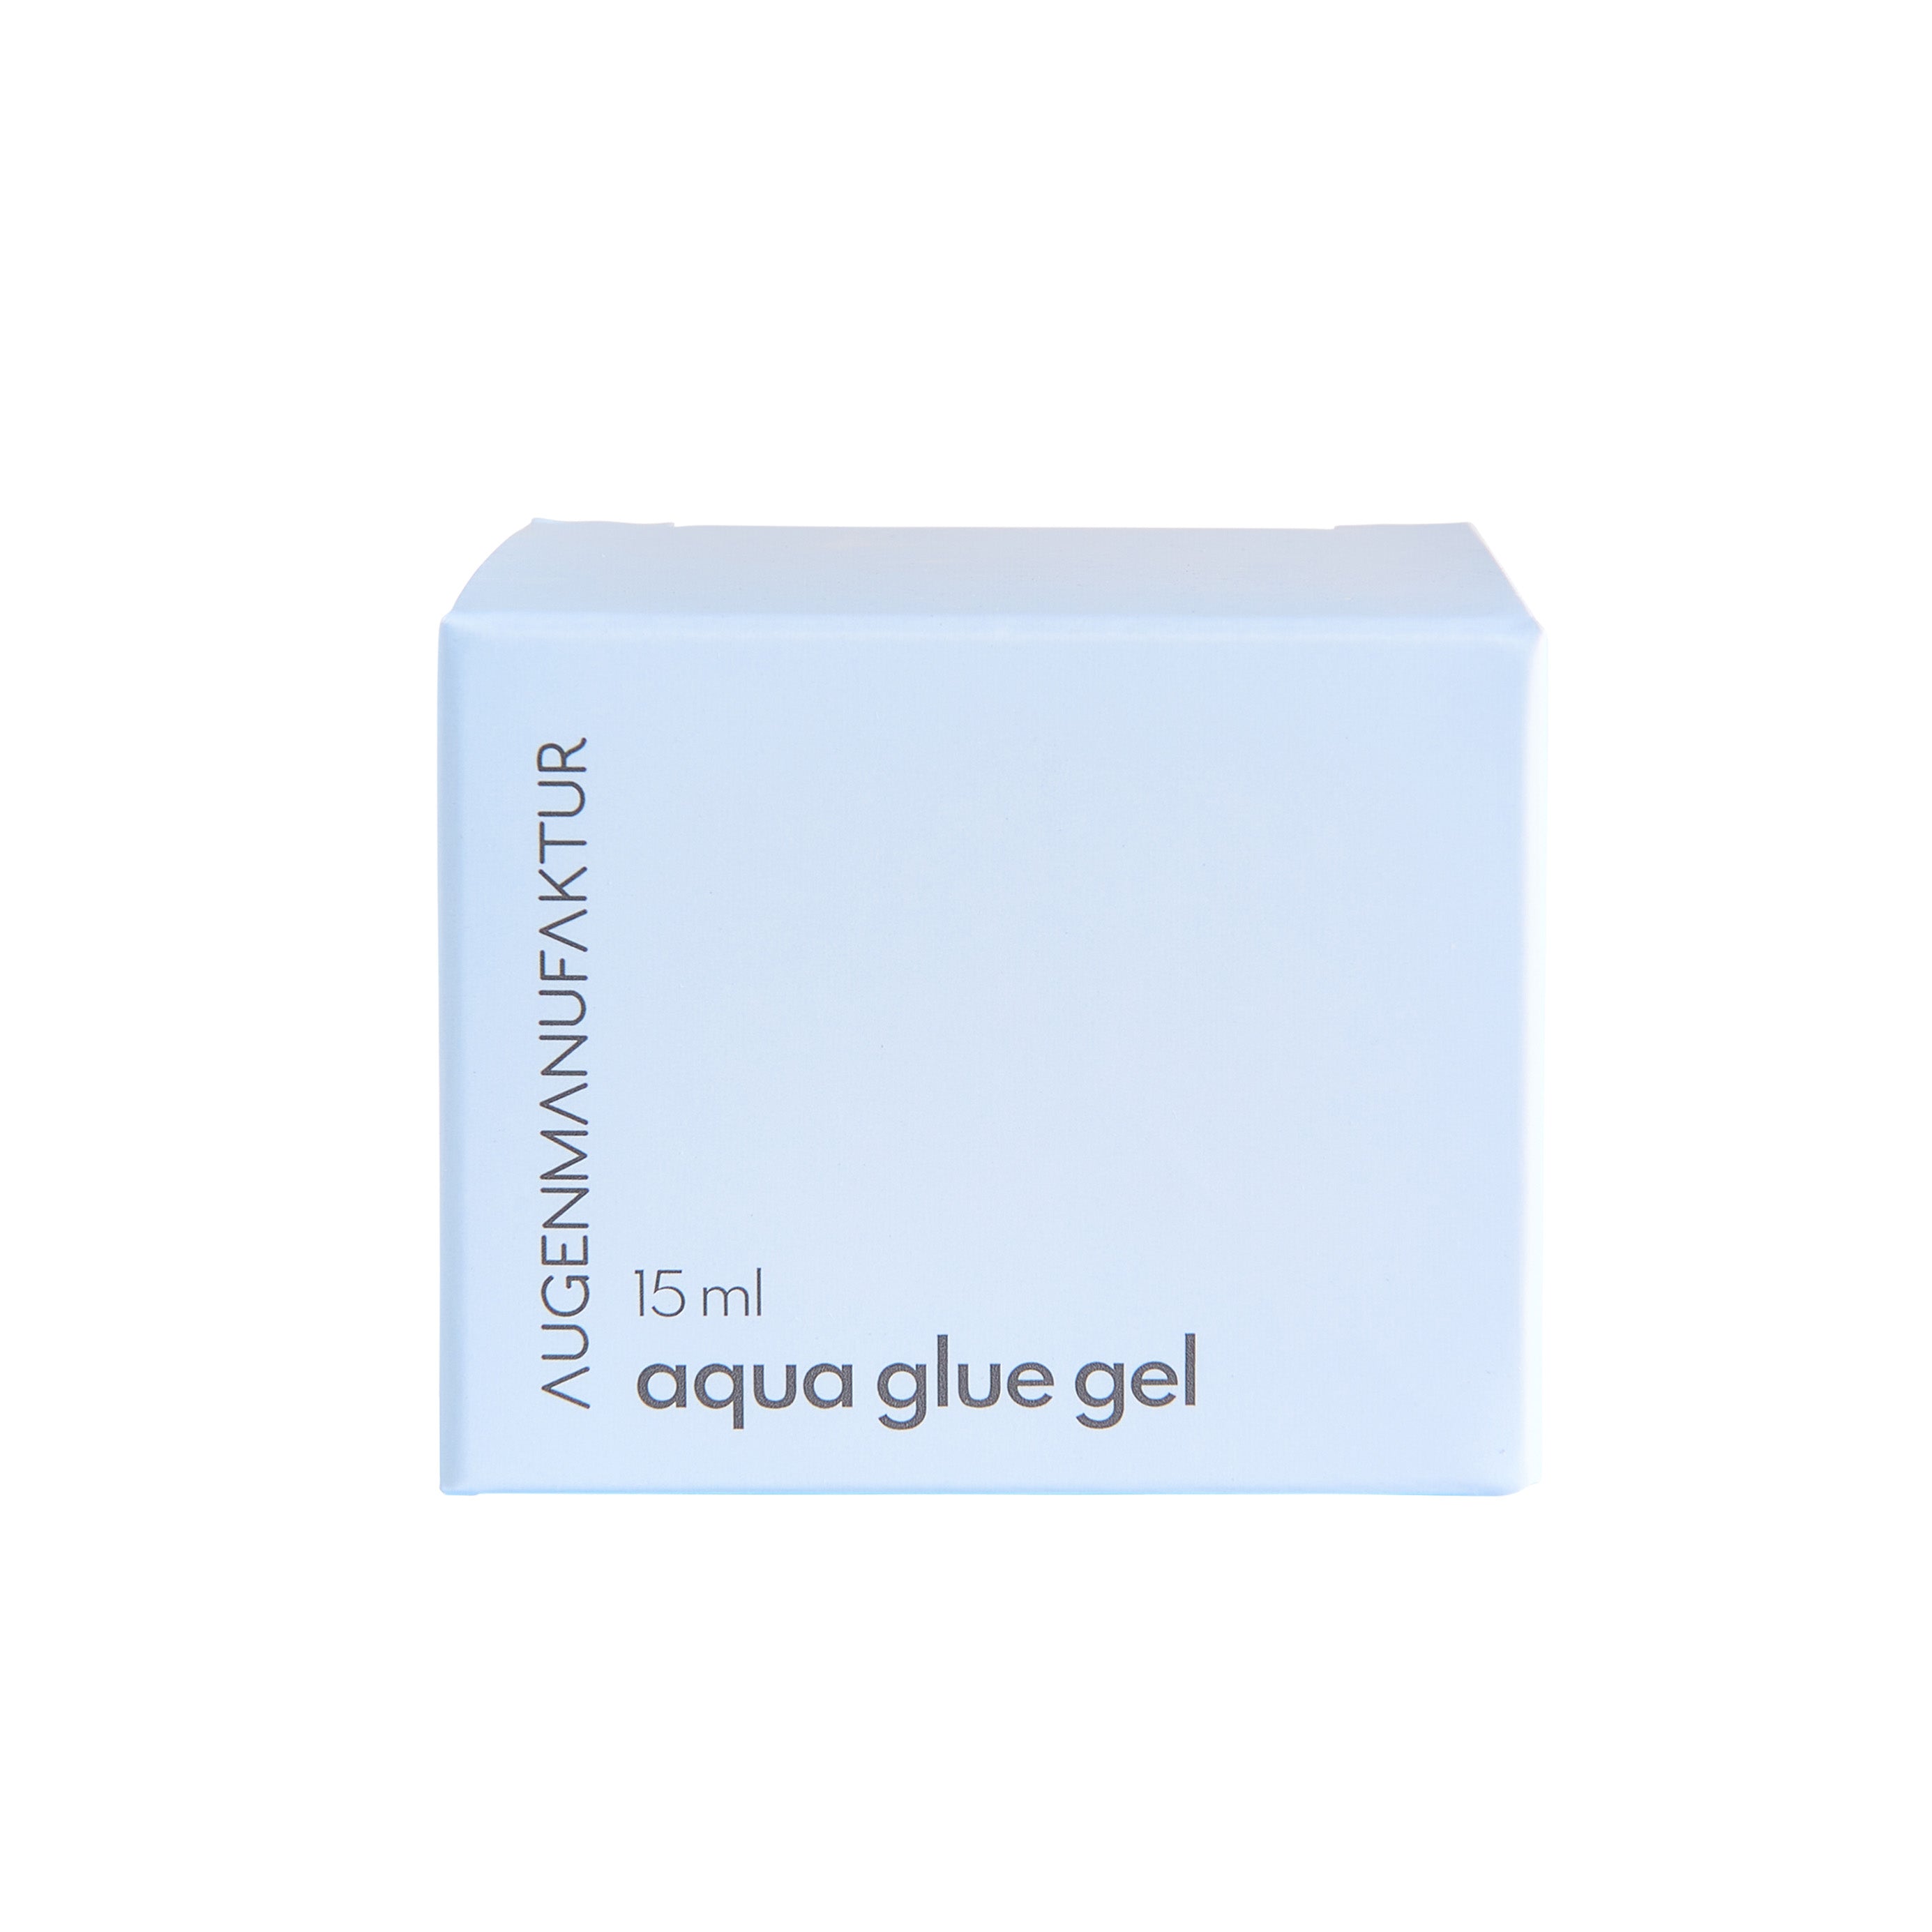 Aqua Glue Gel